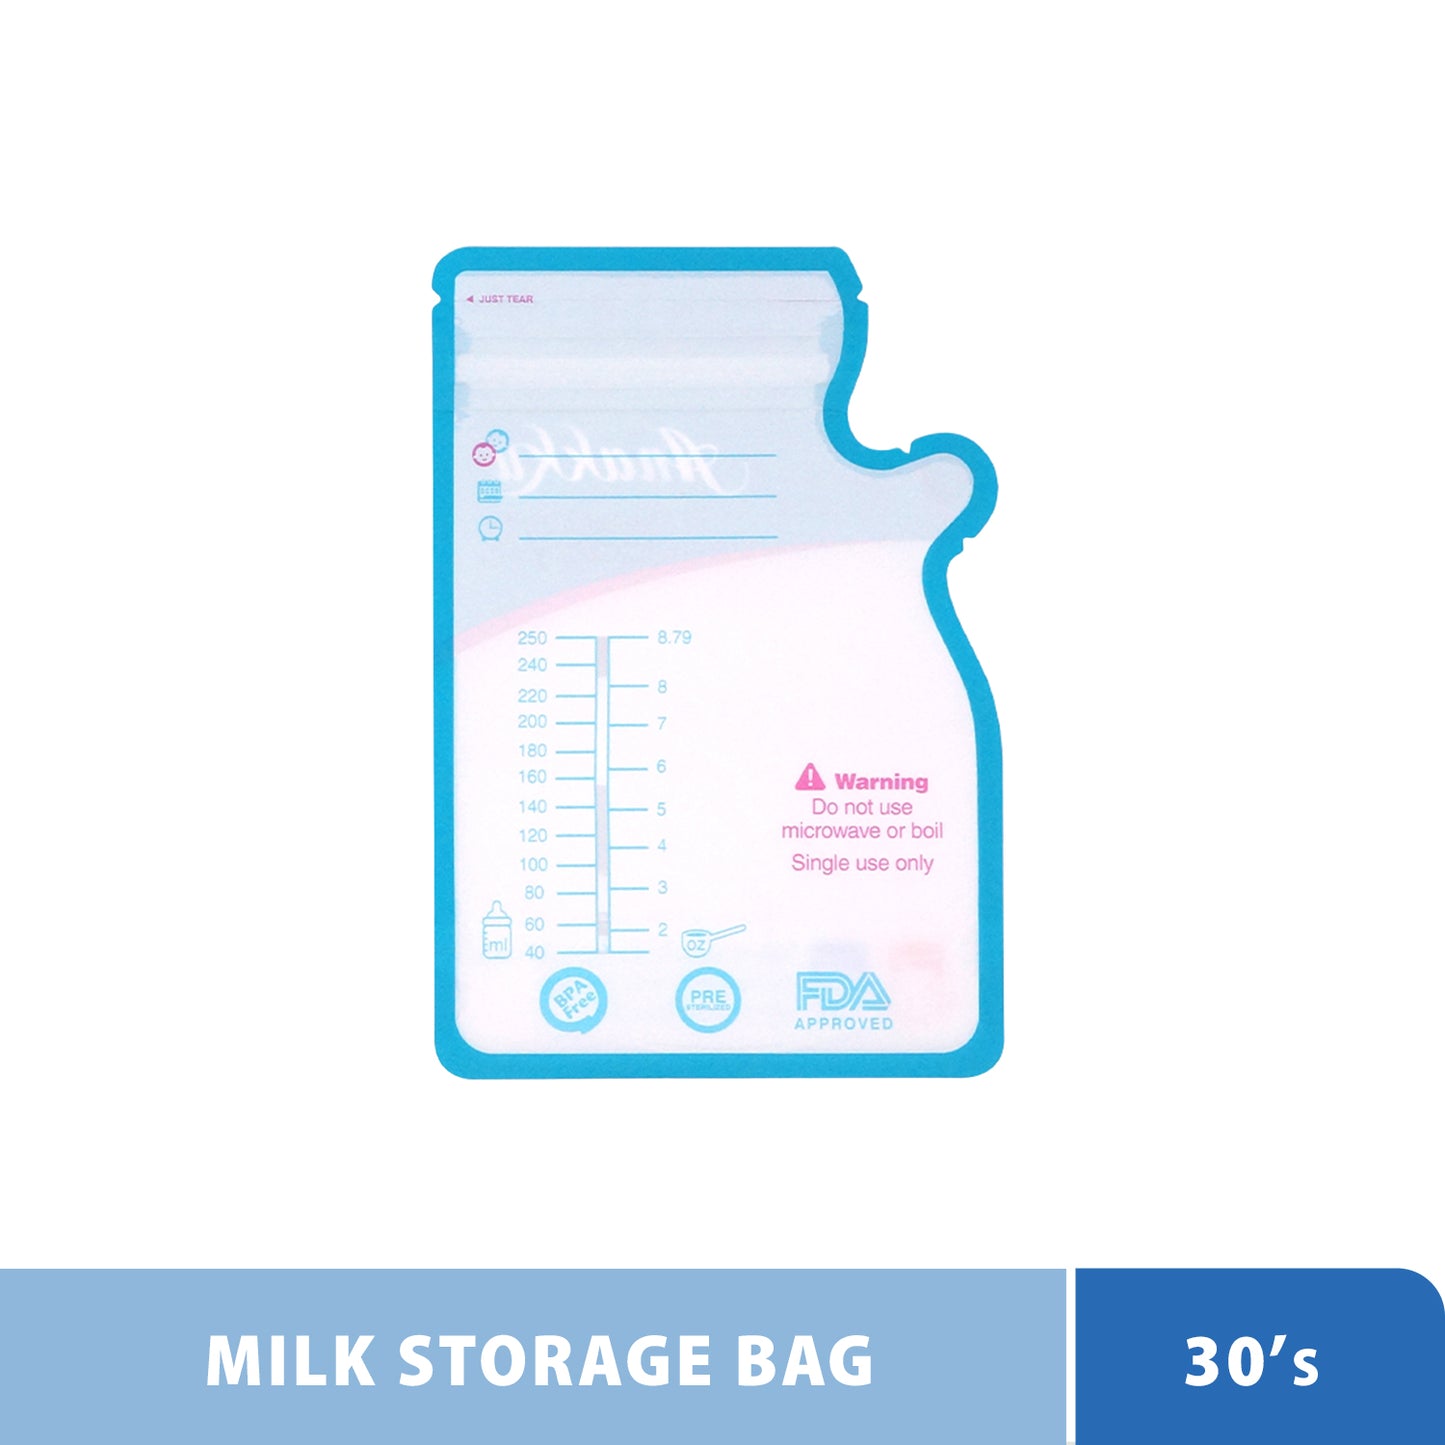 Anakku Milk Storage Bag W Thermal Sensor 250ml-30S 164-115